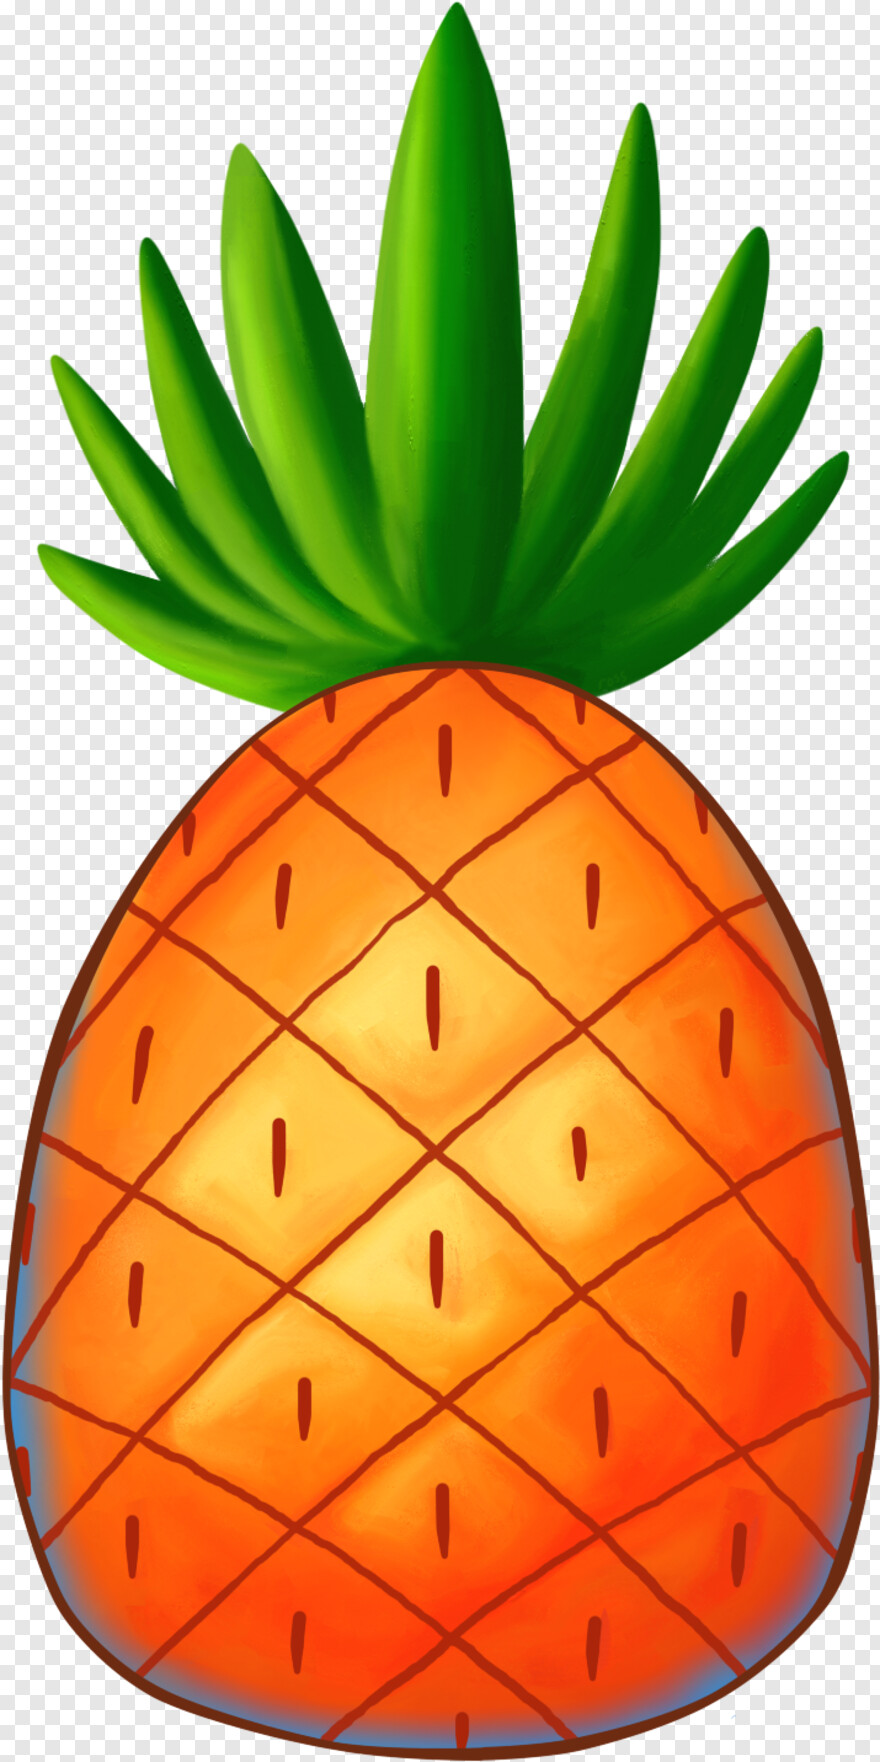 pineapple # 654223